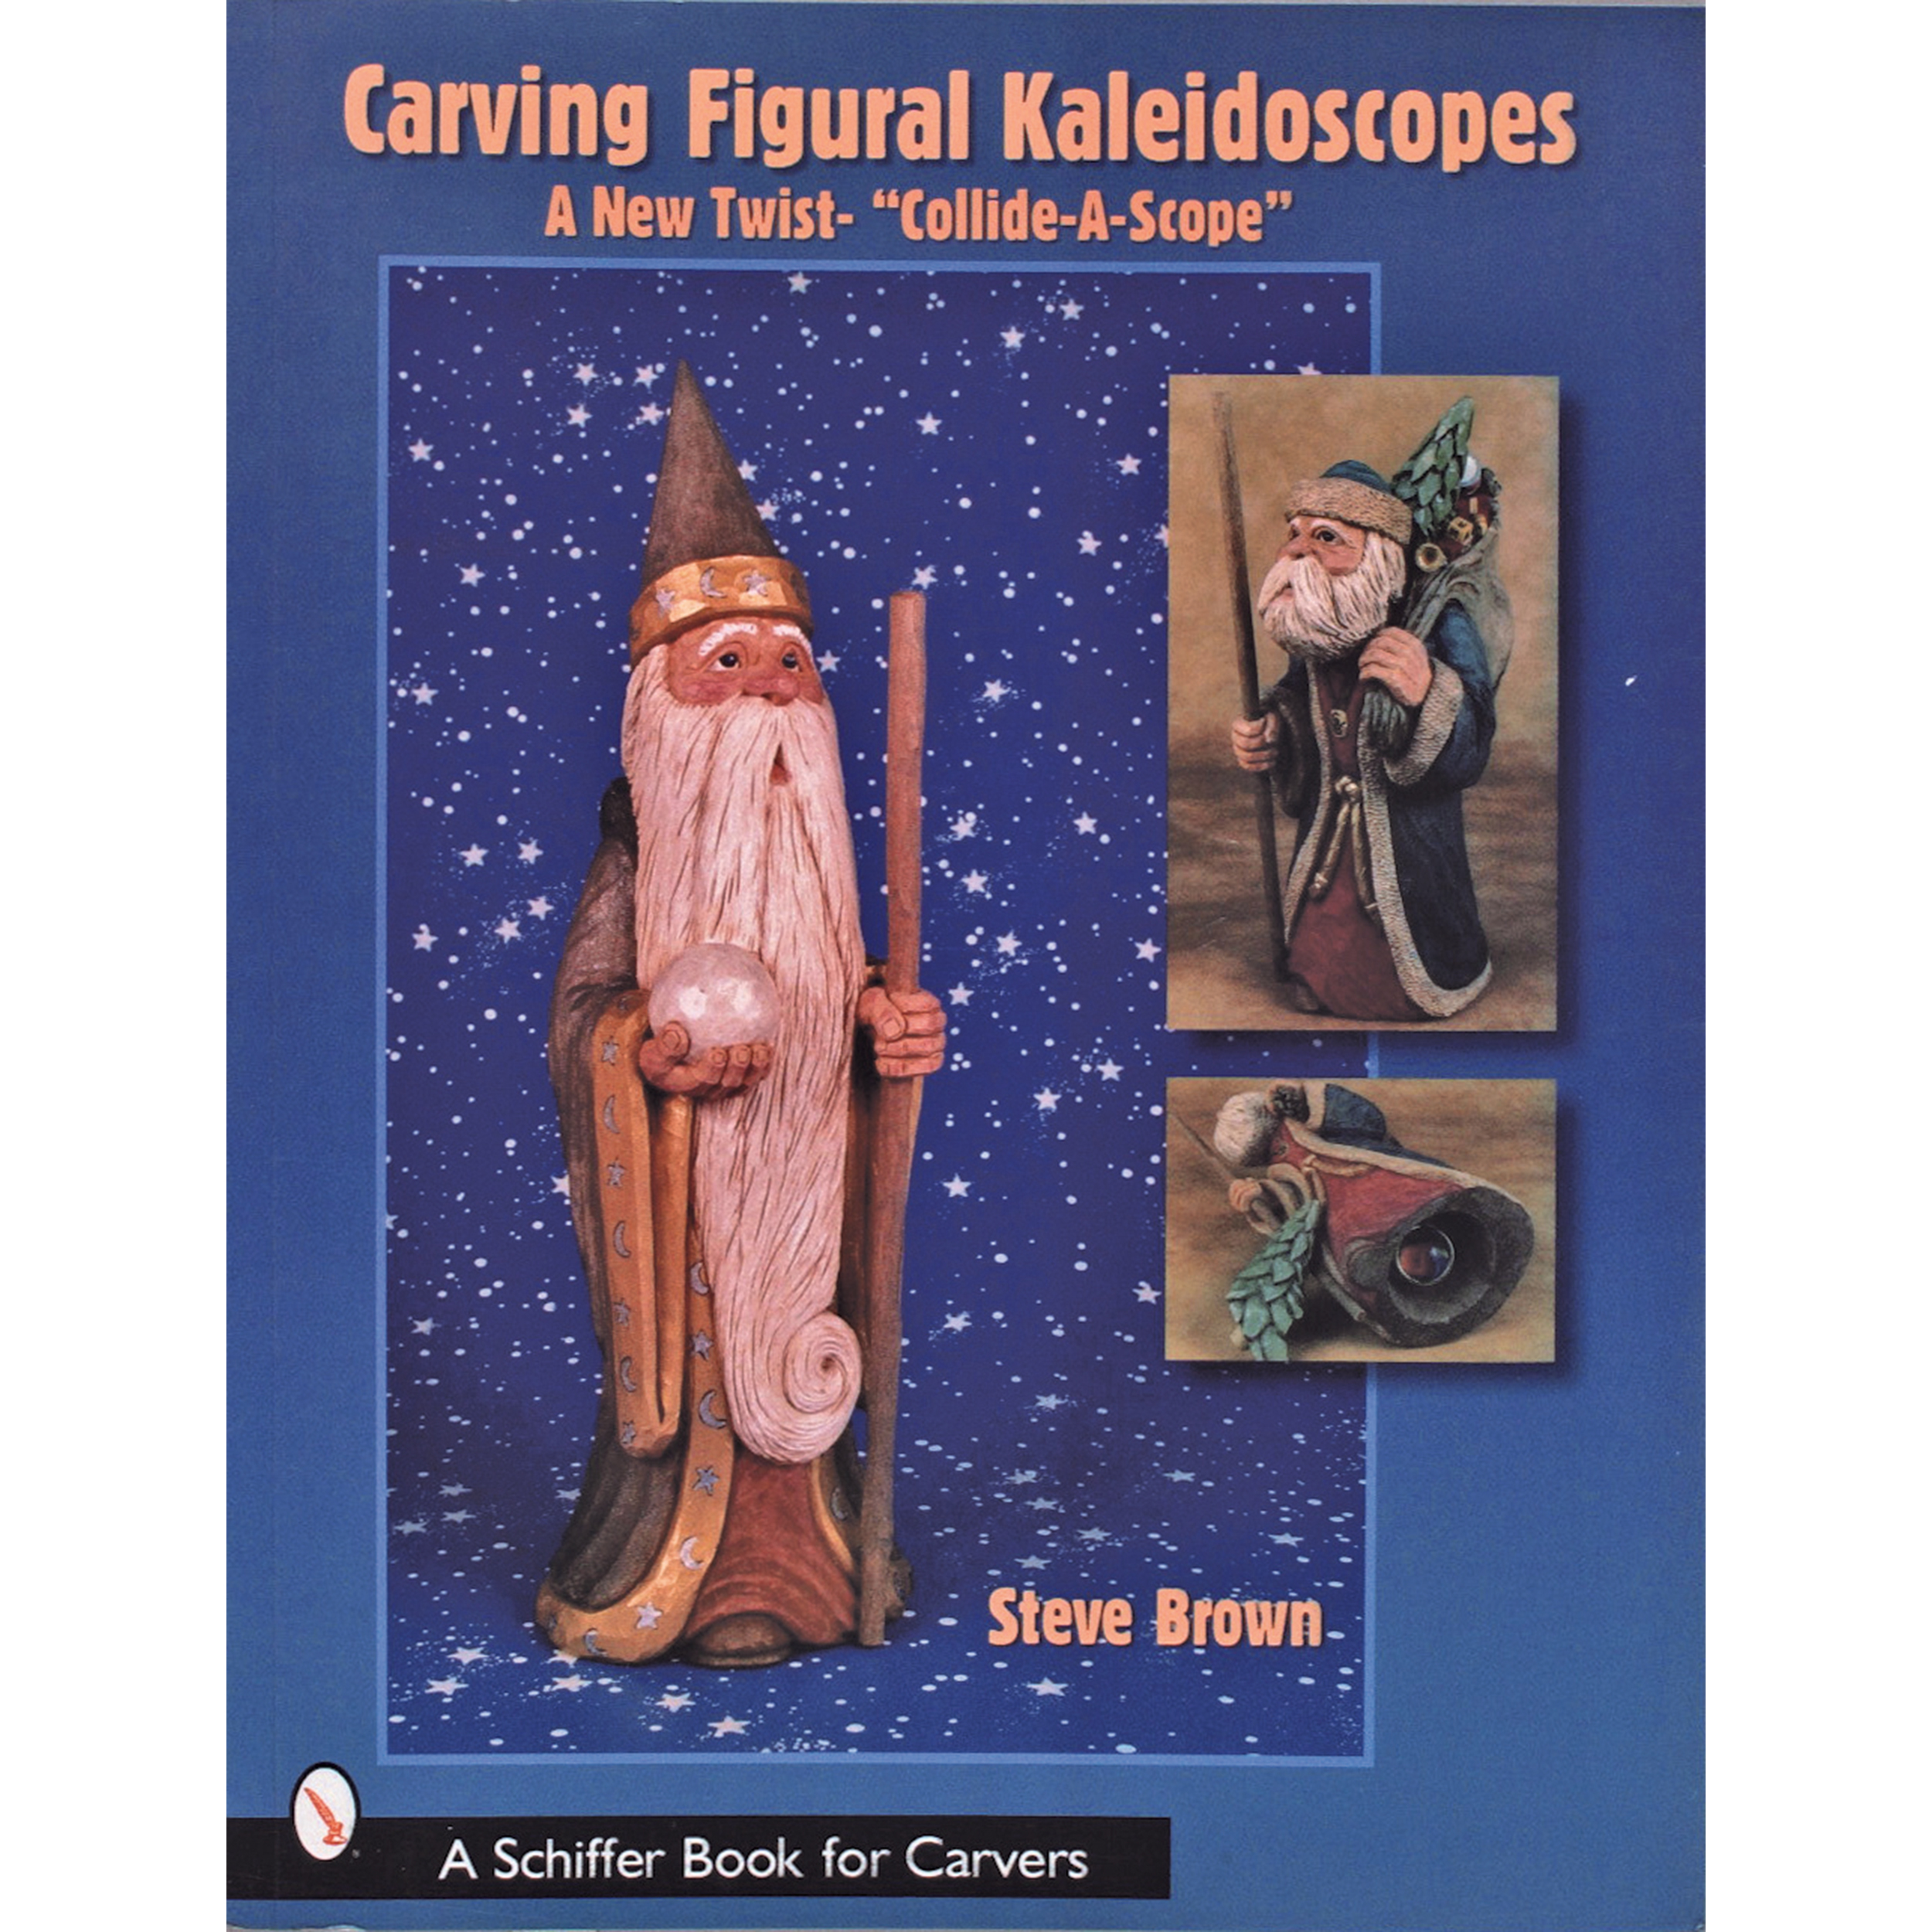 Carving Figural Kaleidoscopes